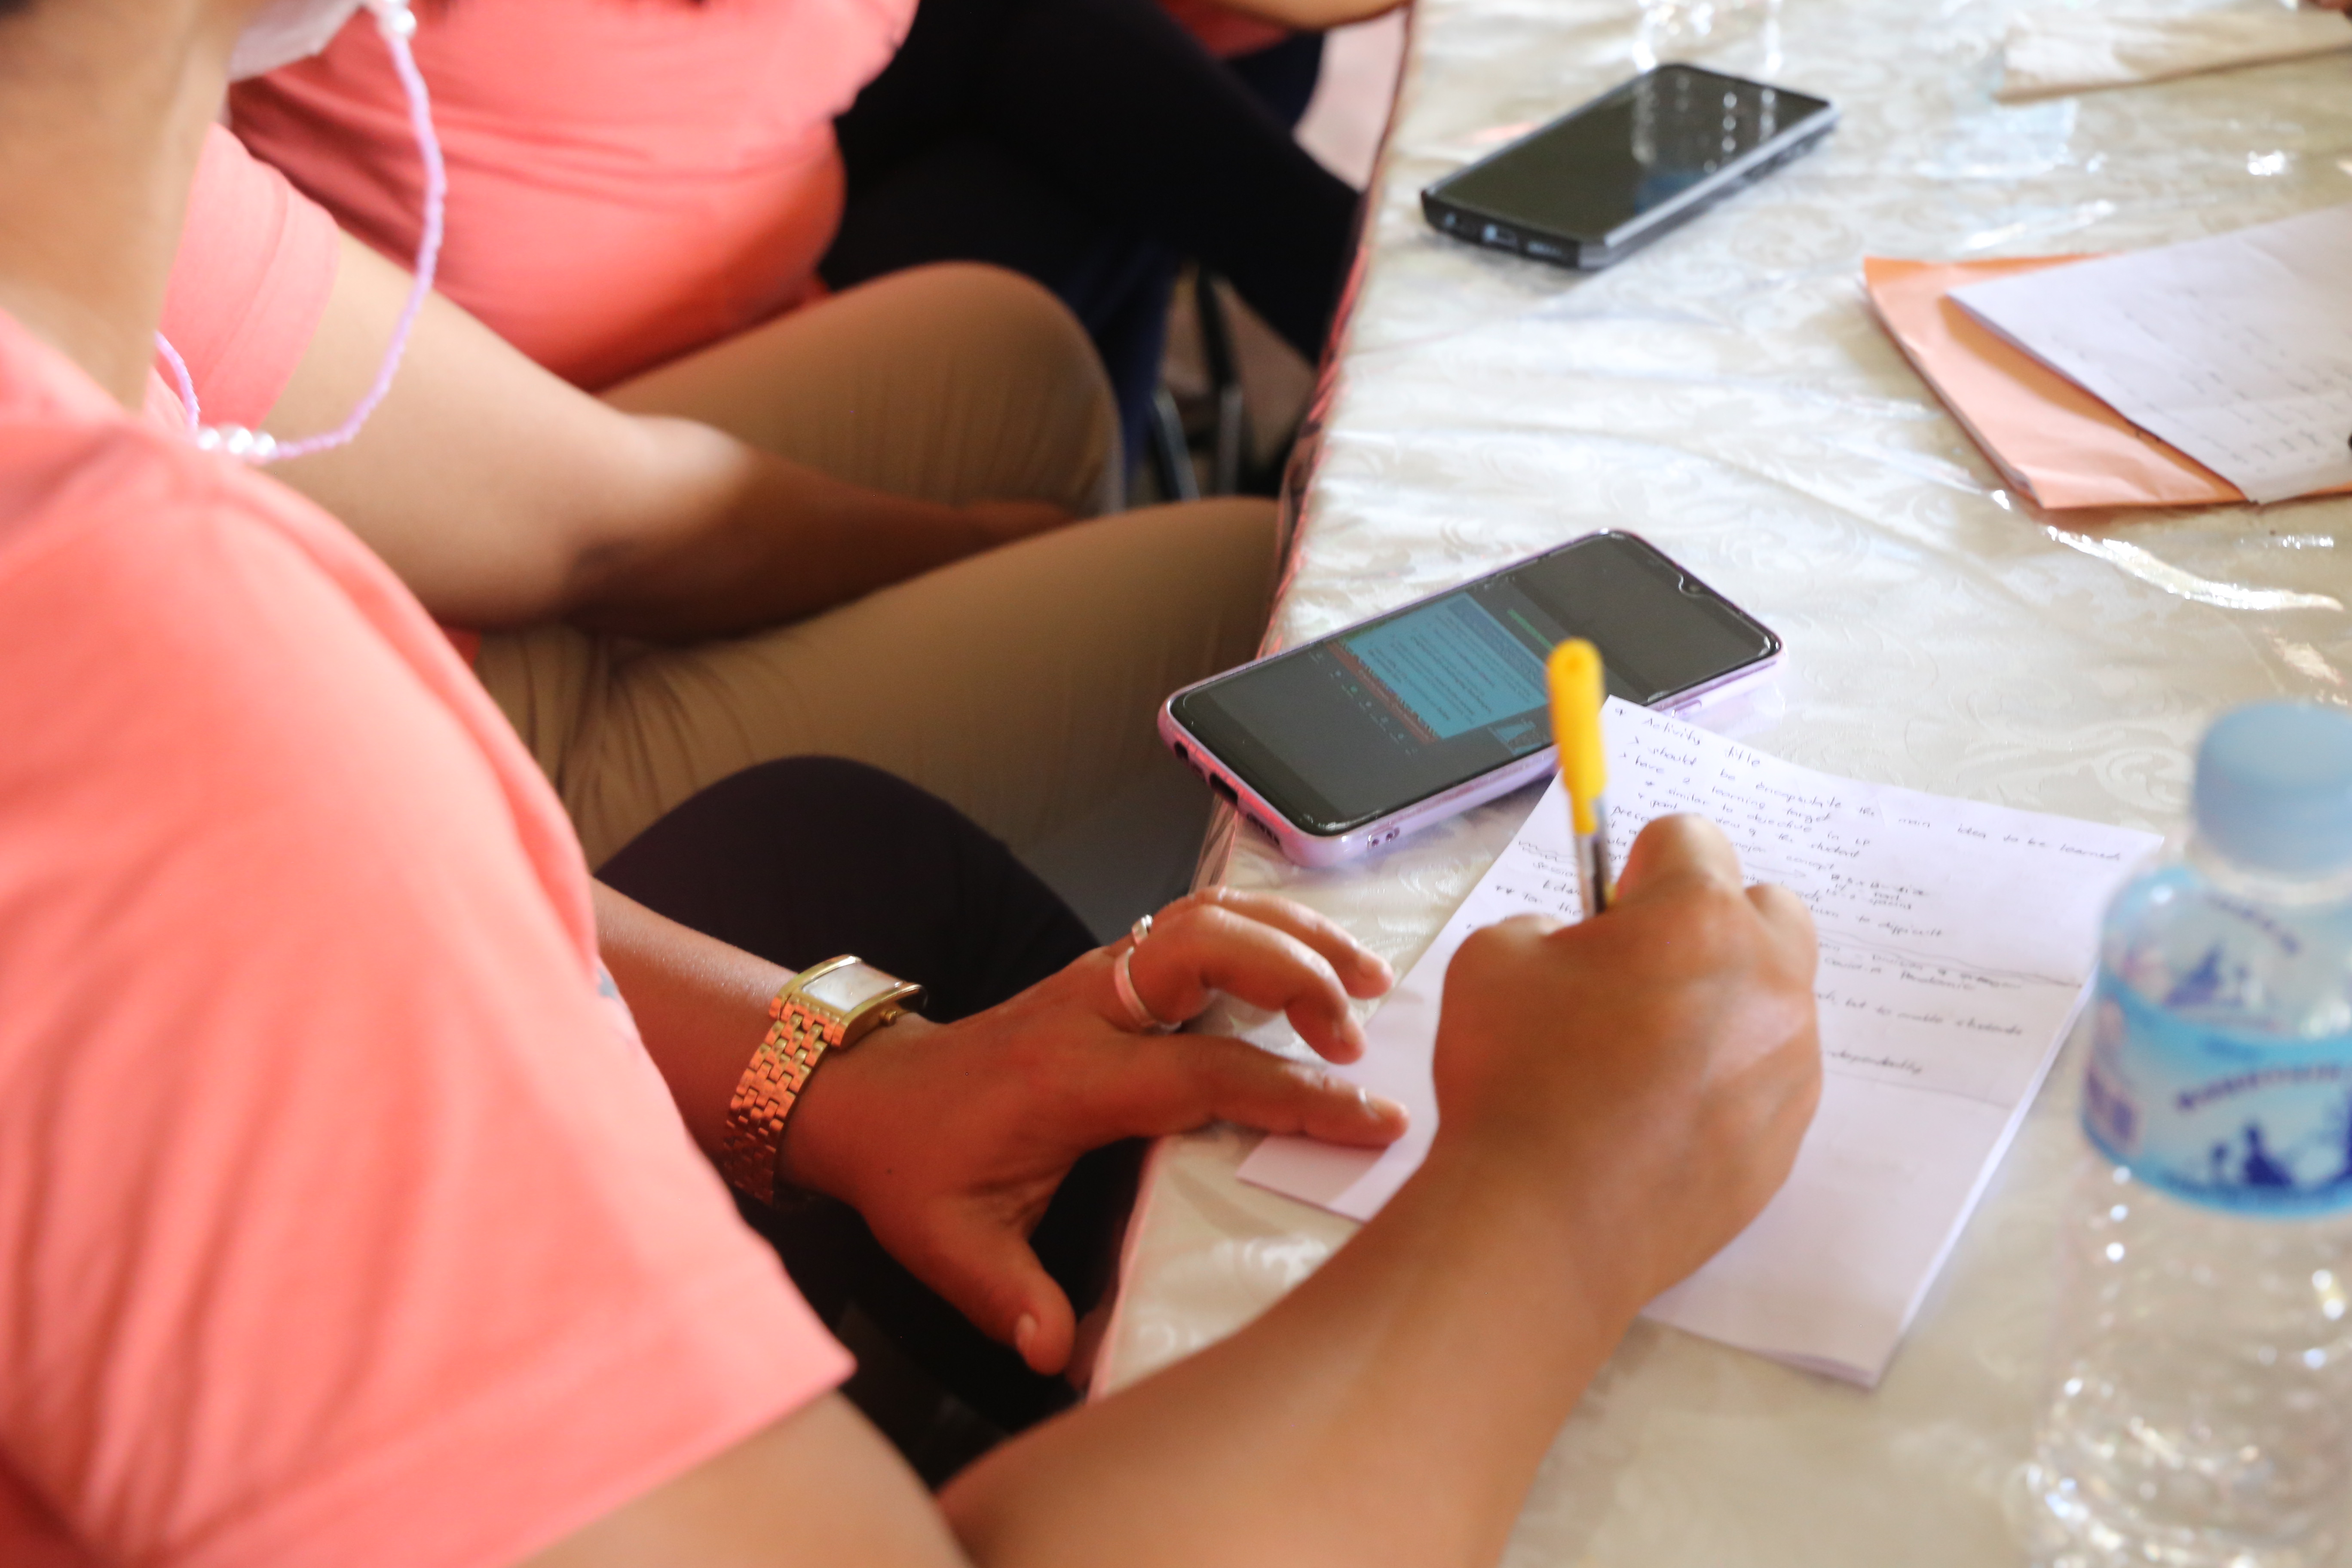 PLDT, Smart enable Luzon schools transition to on-site classes